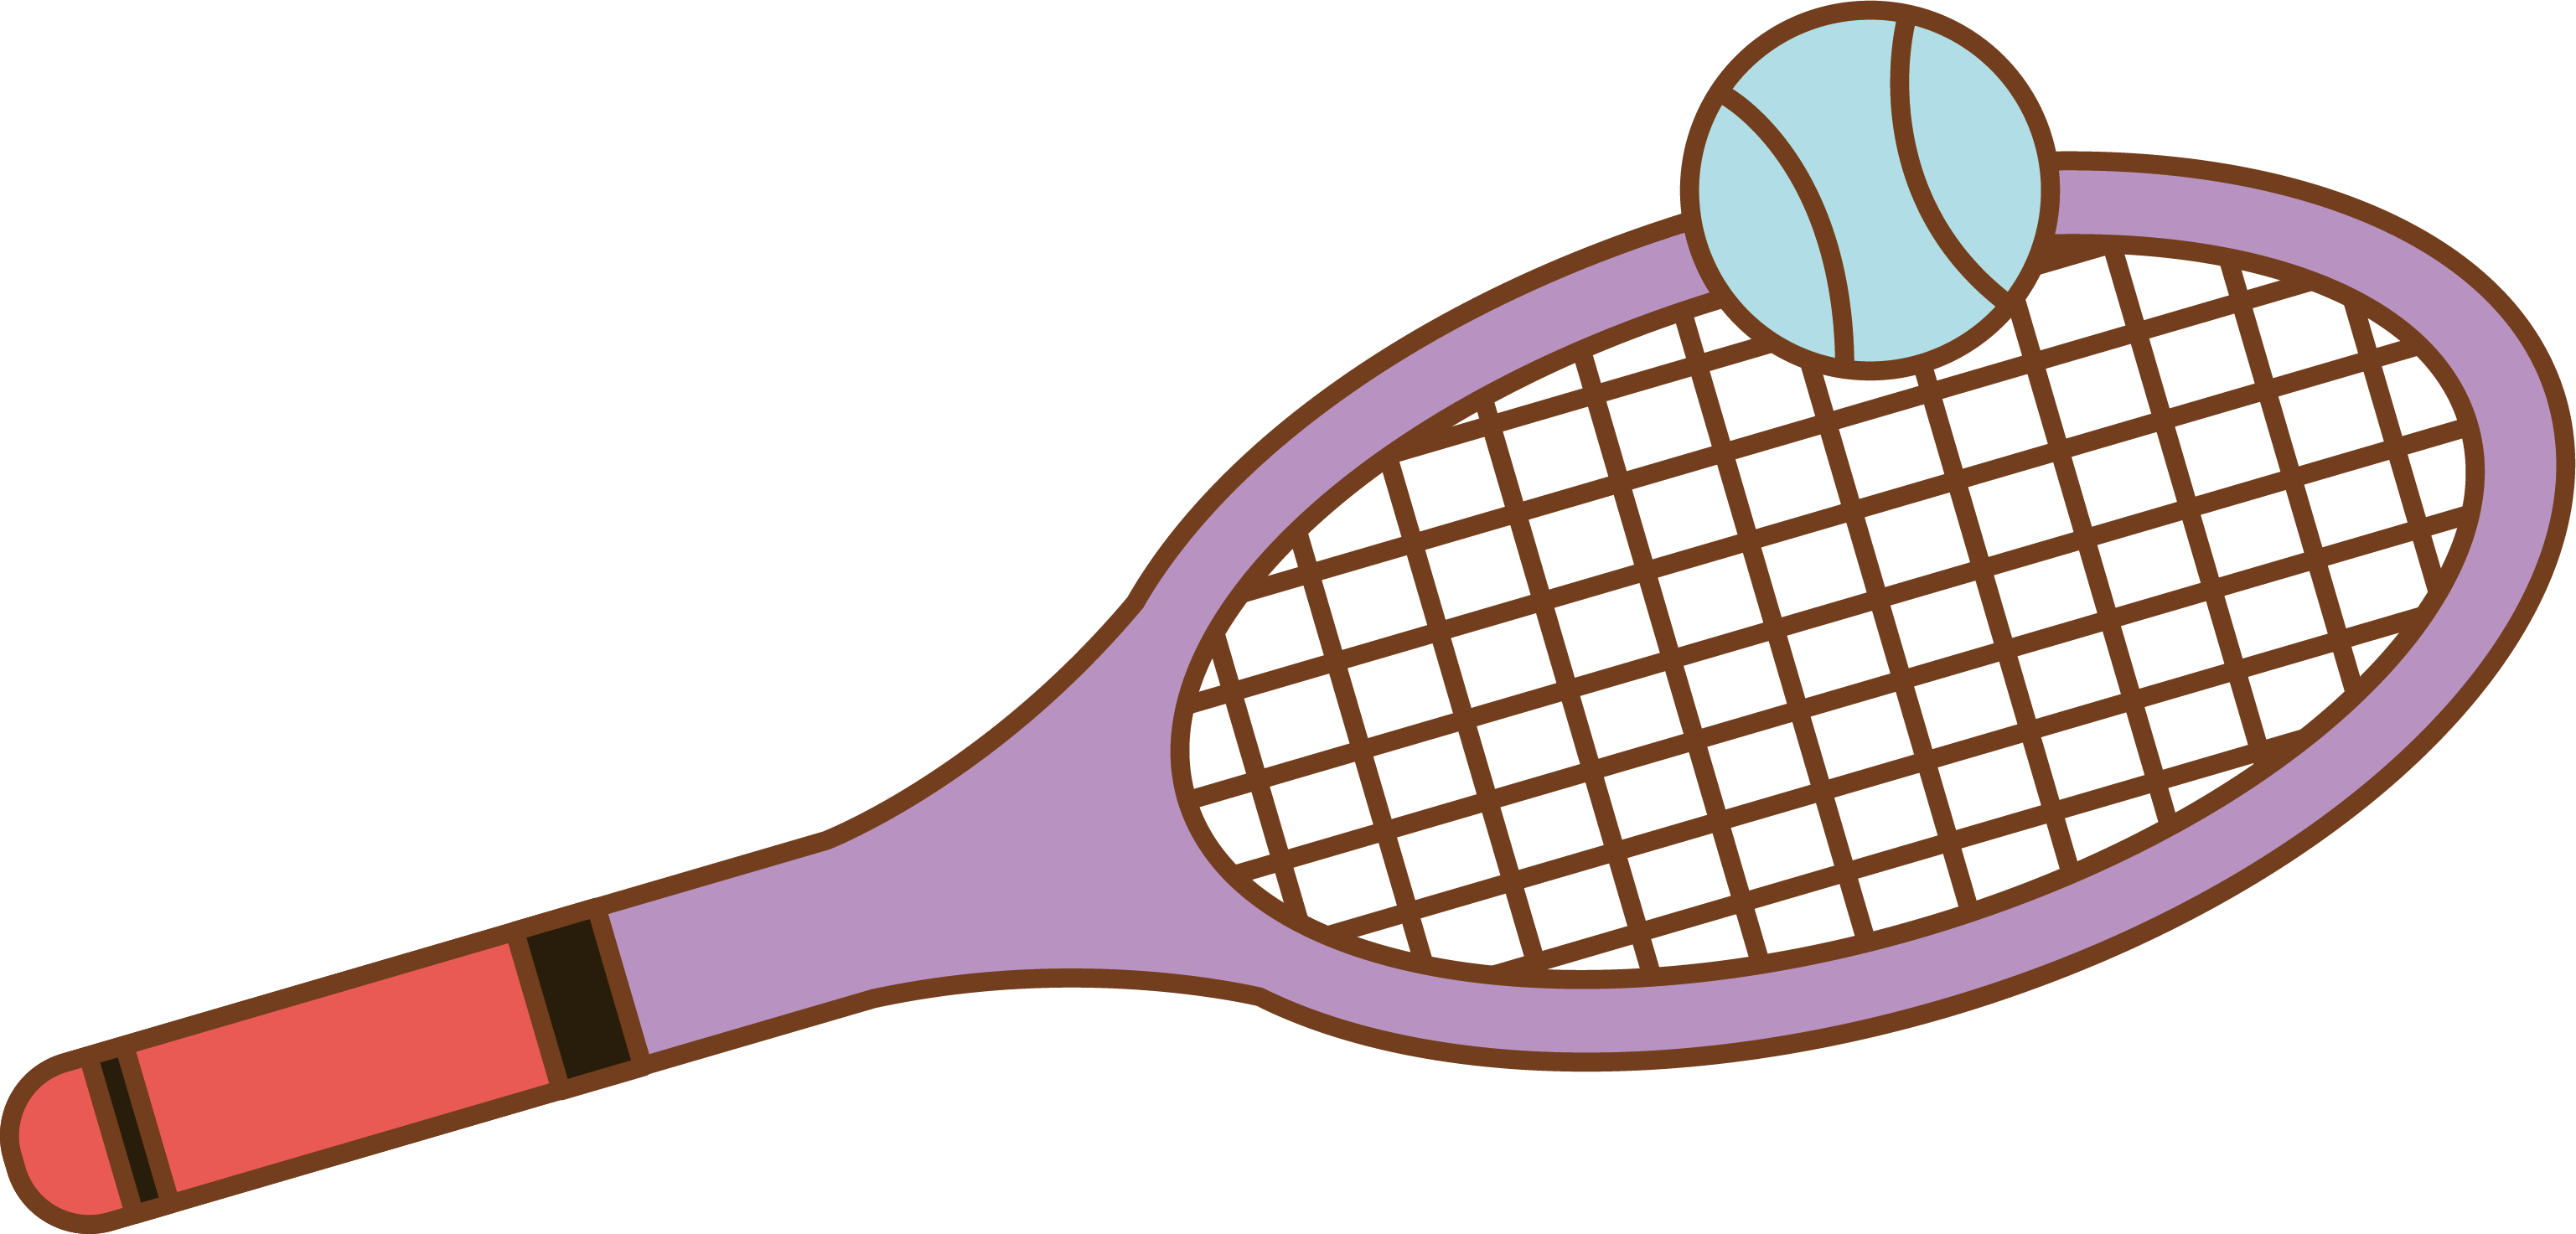 Net badminton